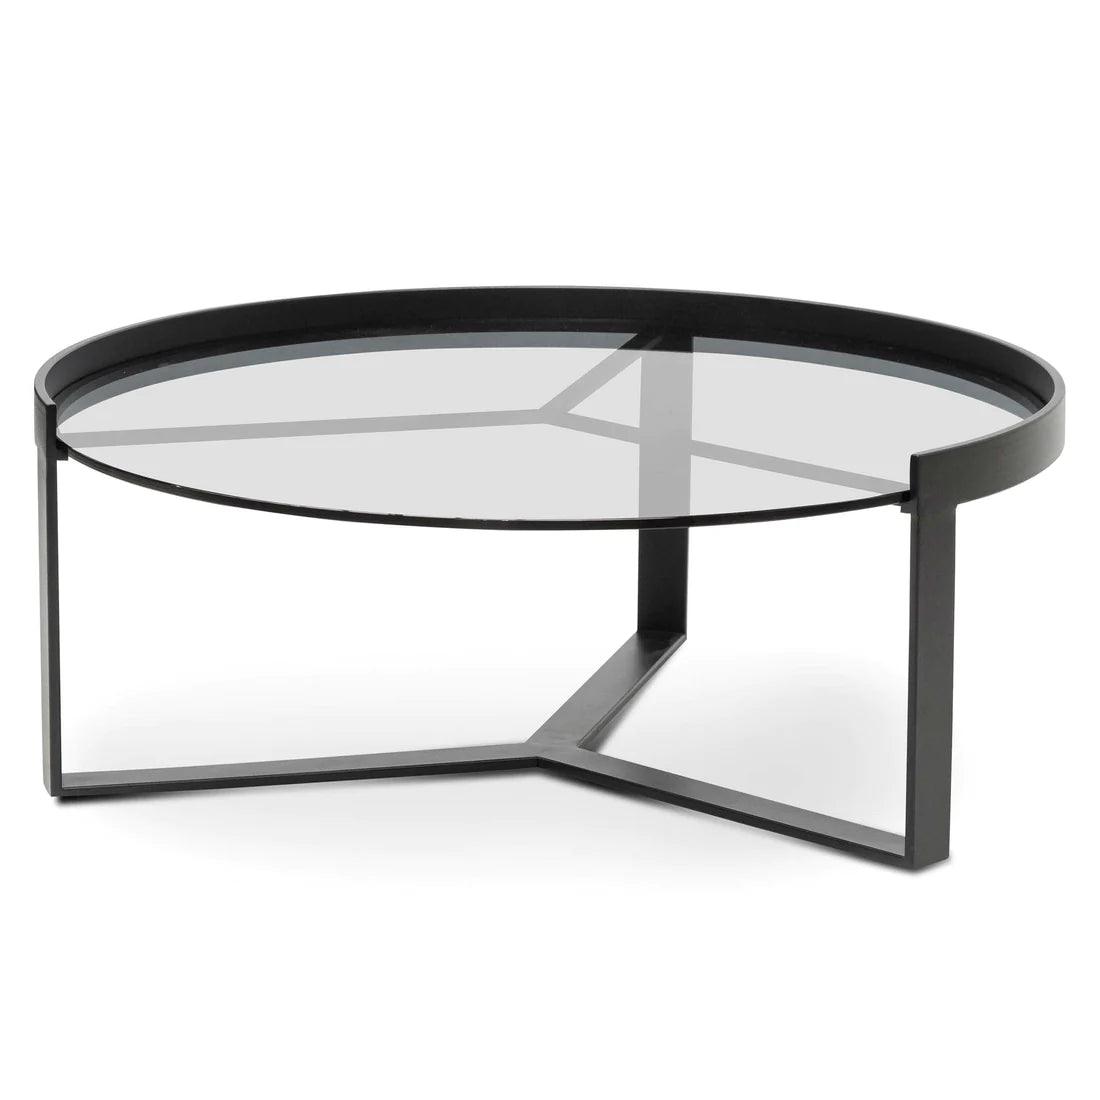 Alexis 90cm Glass Coffee Table - Black - Furniture Castle